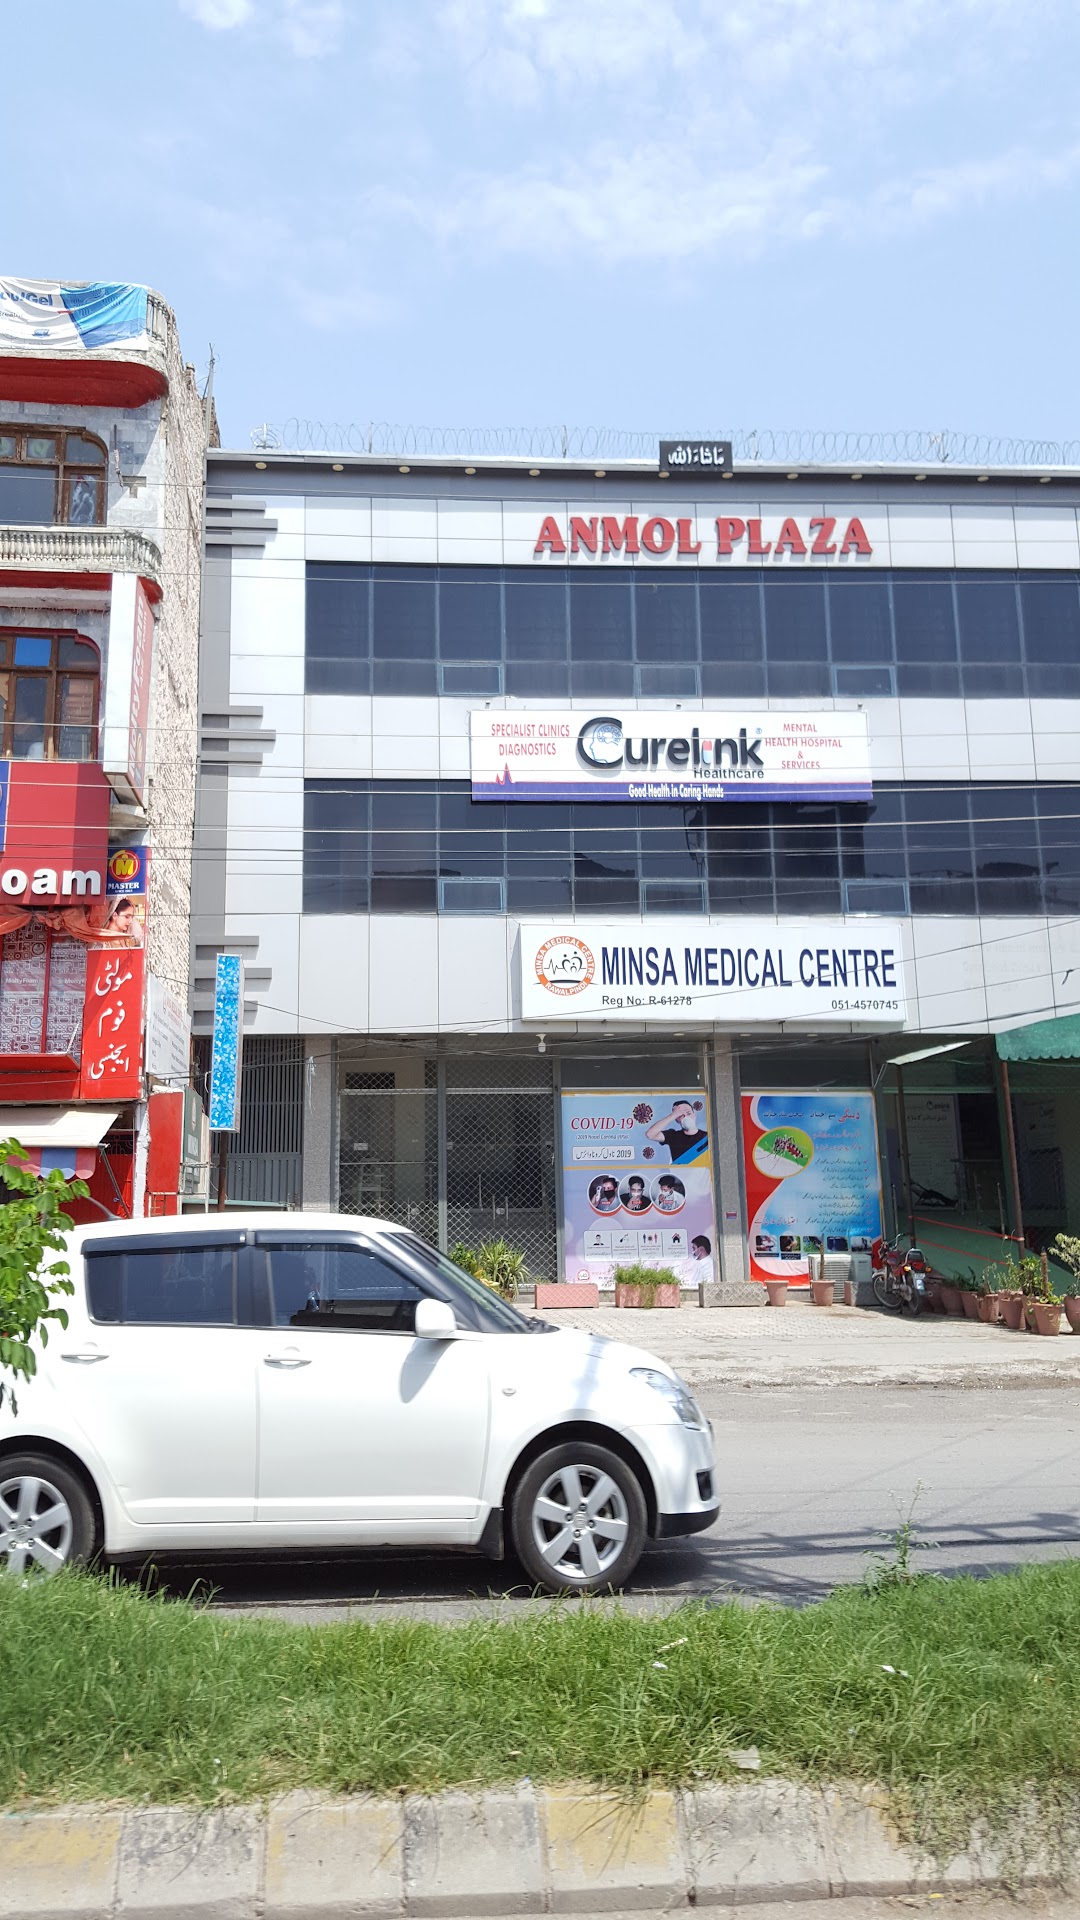 Minsa Medical Centre